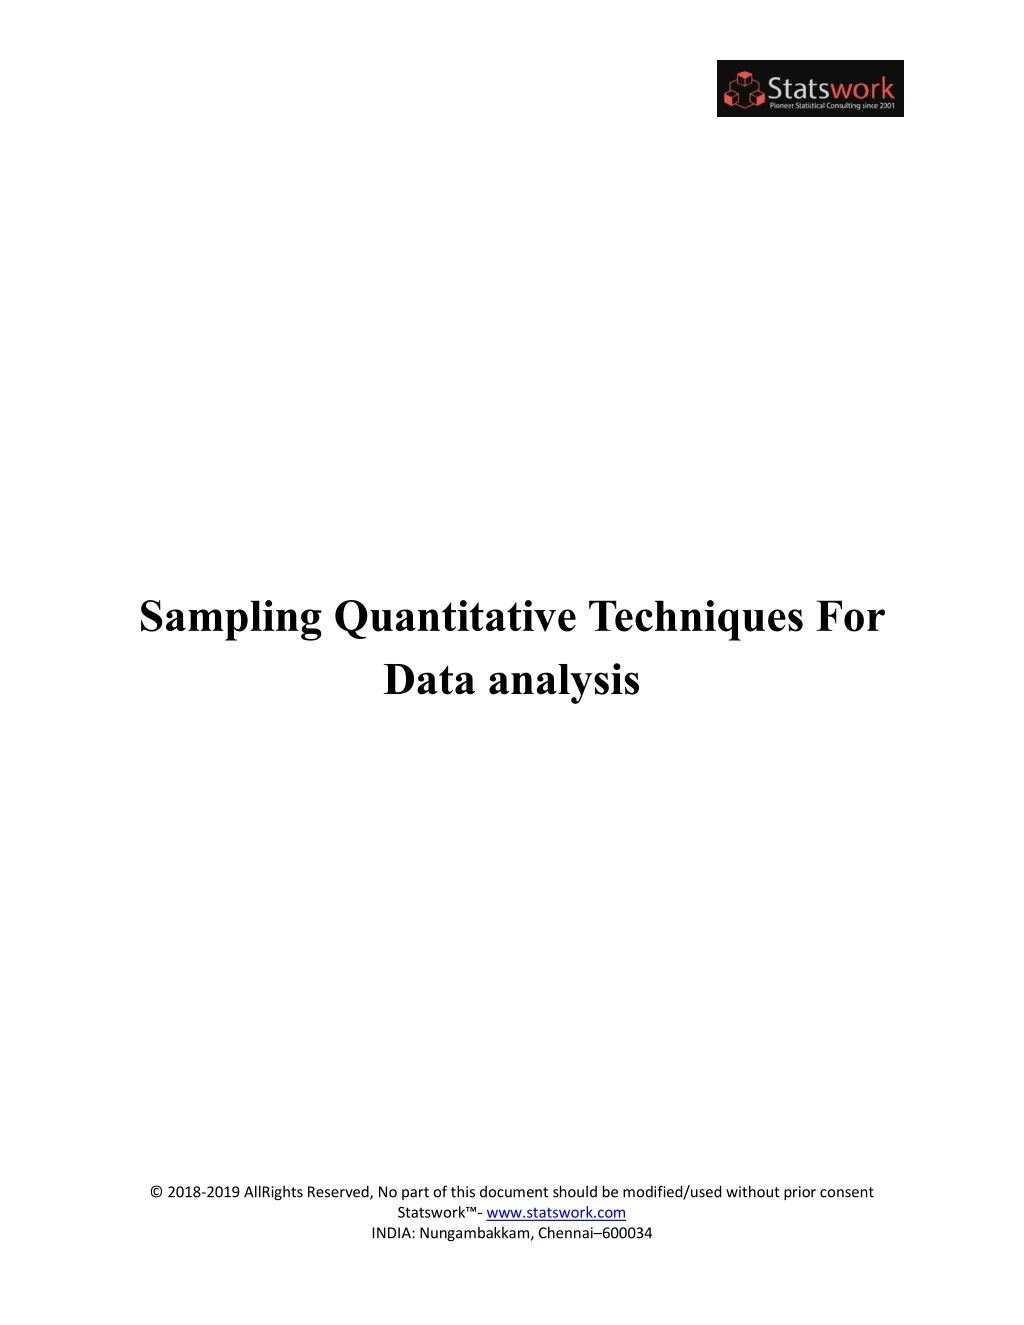 sampling quantitative techniques for data analysis